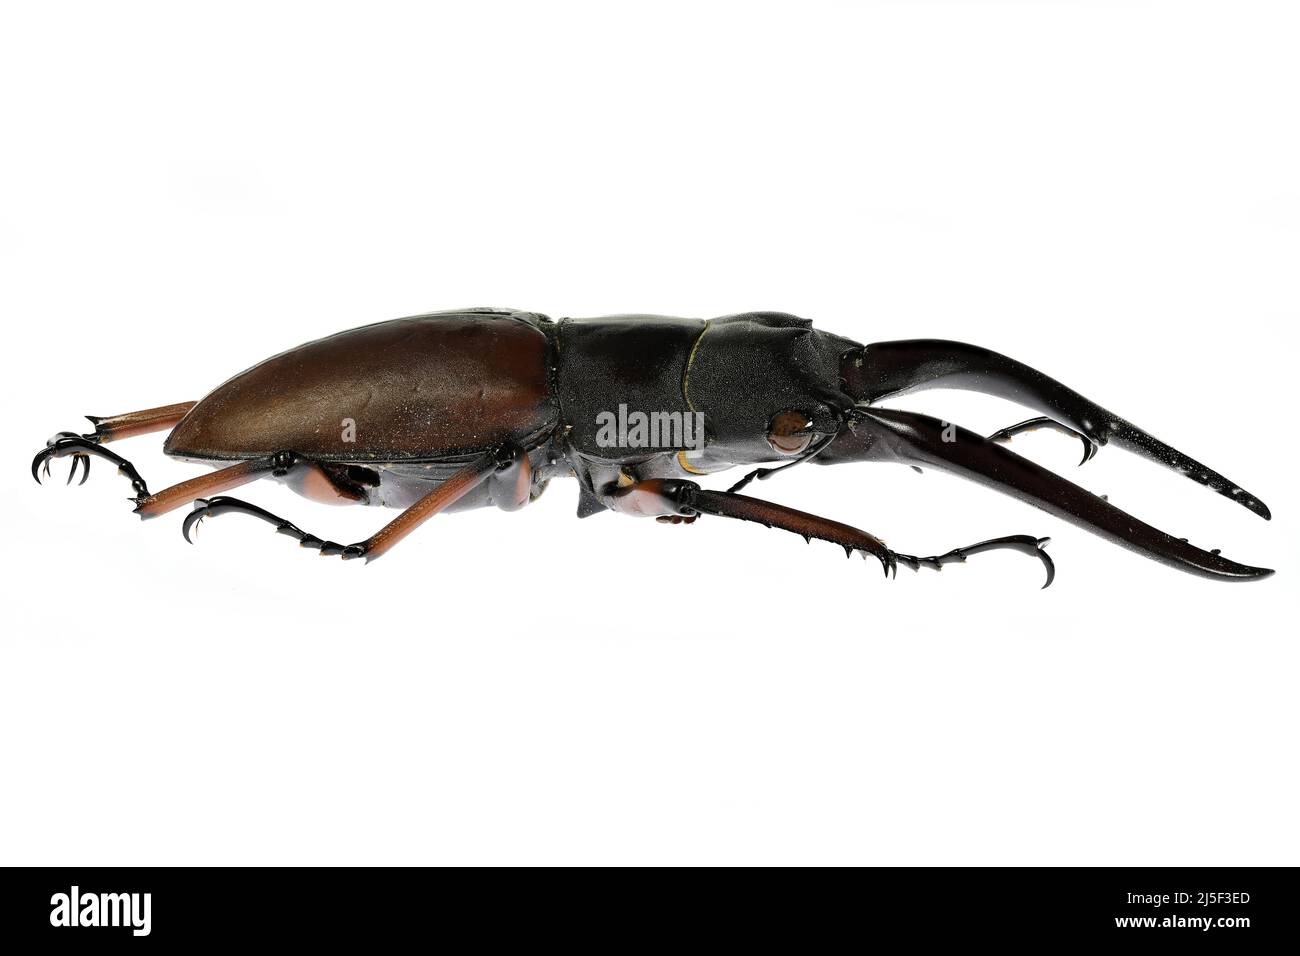 stag beetle (Prosopocoilus astacoides castan) isolated on white background Stock Photo